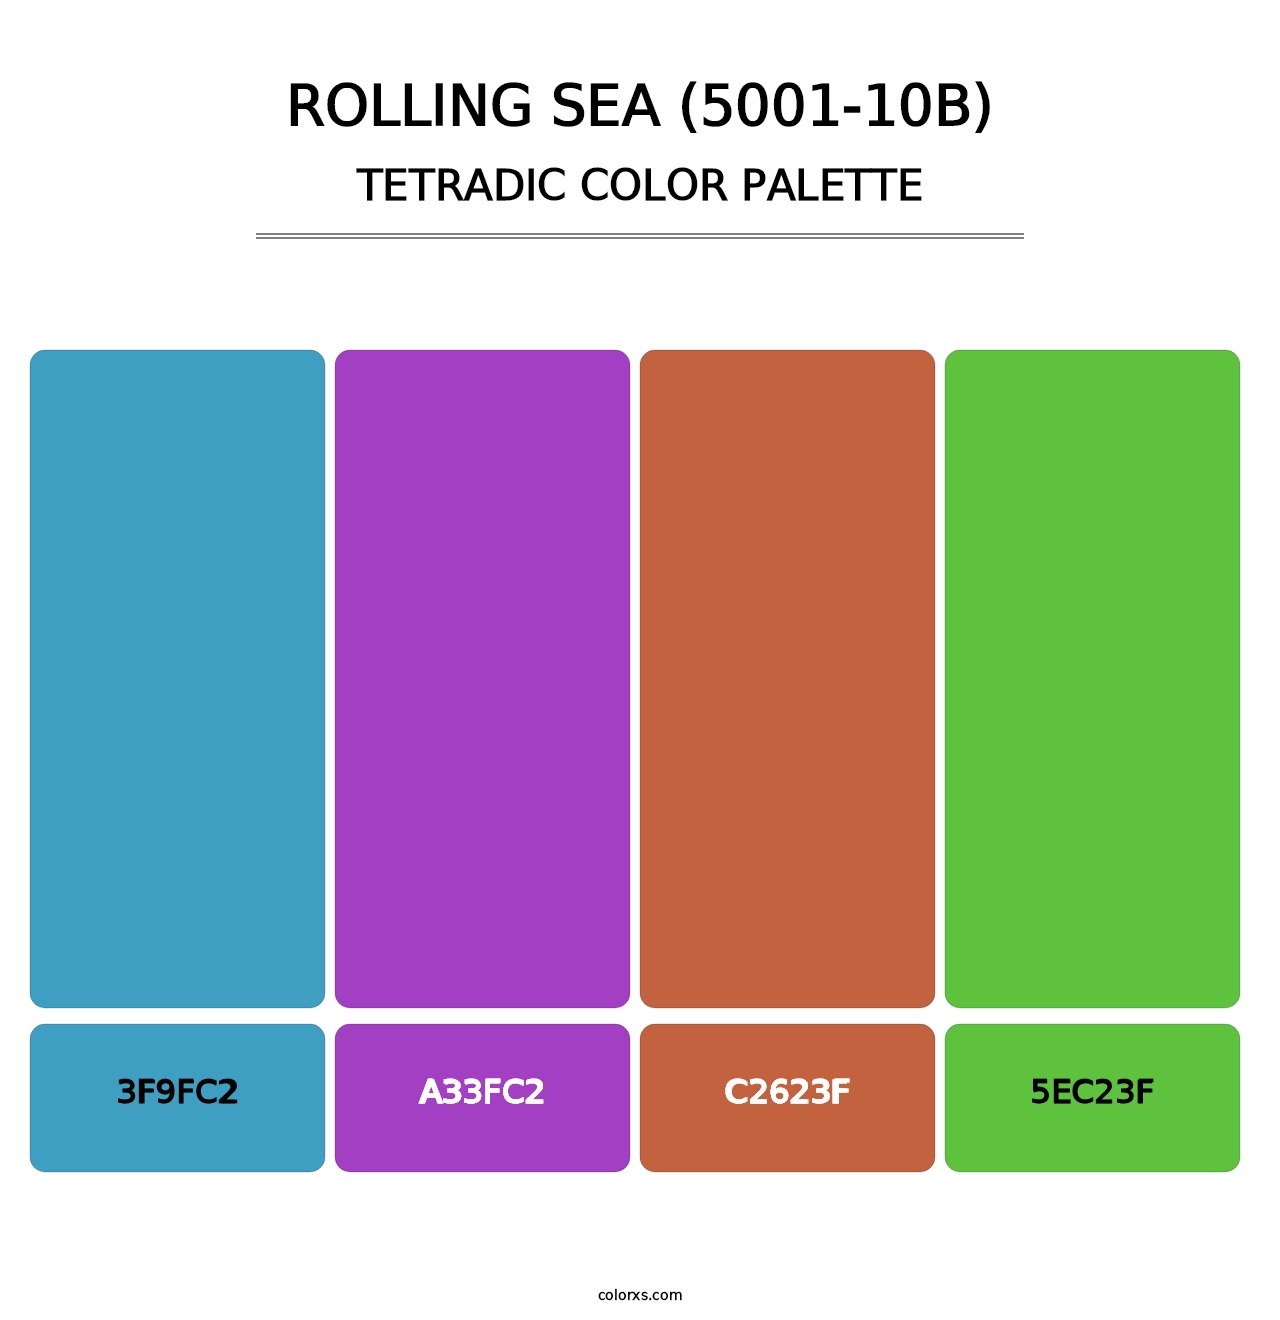 Rolling Sea (5001-10B) - Tetradic Color Palette